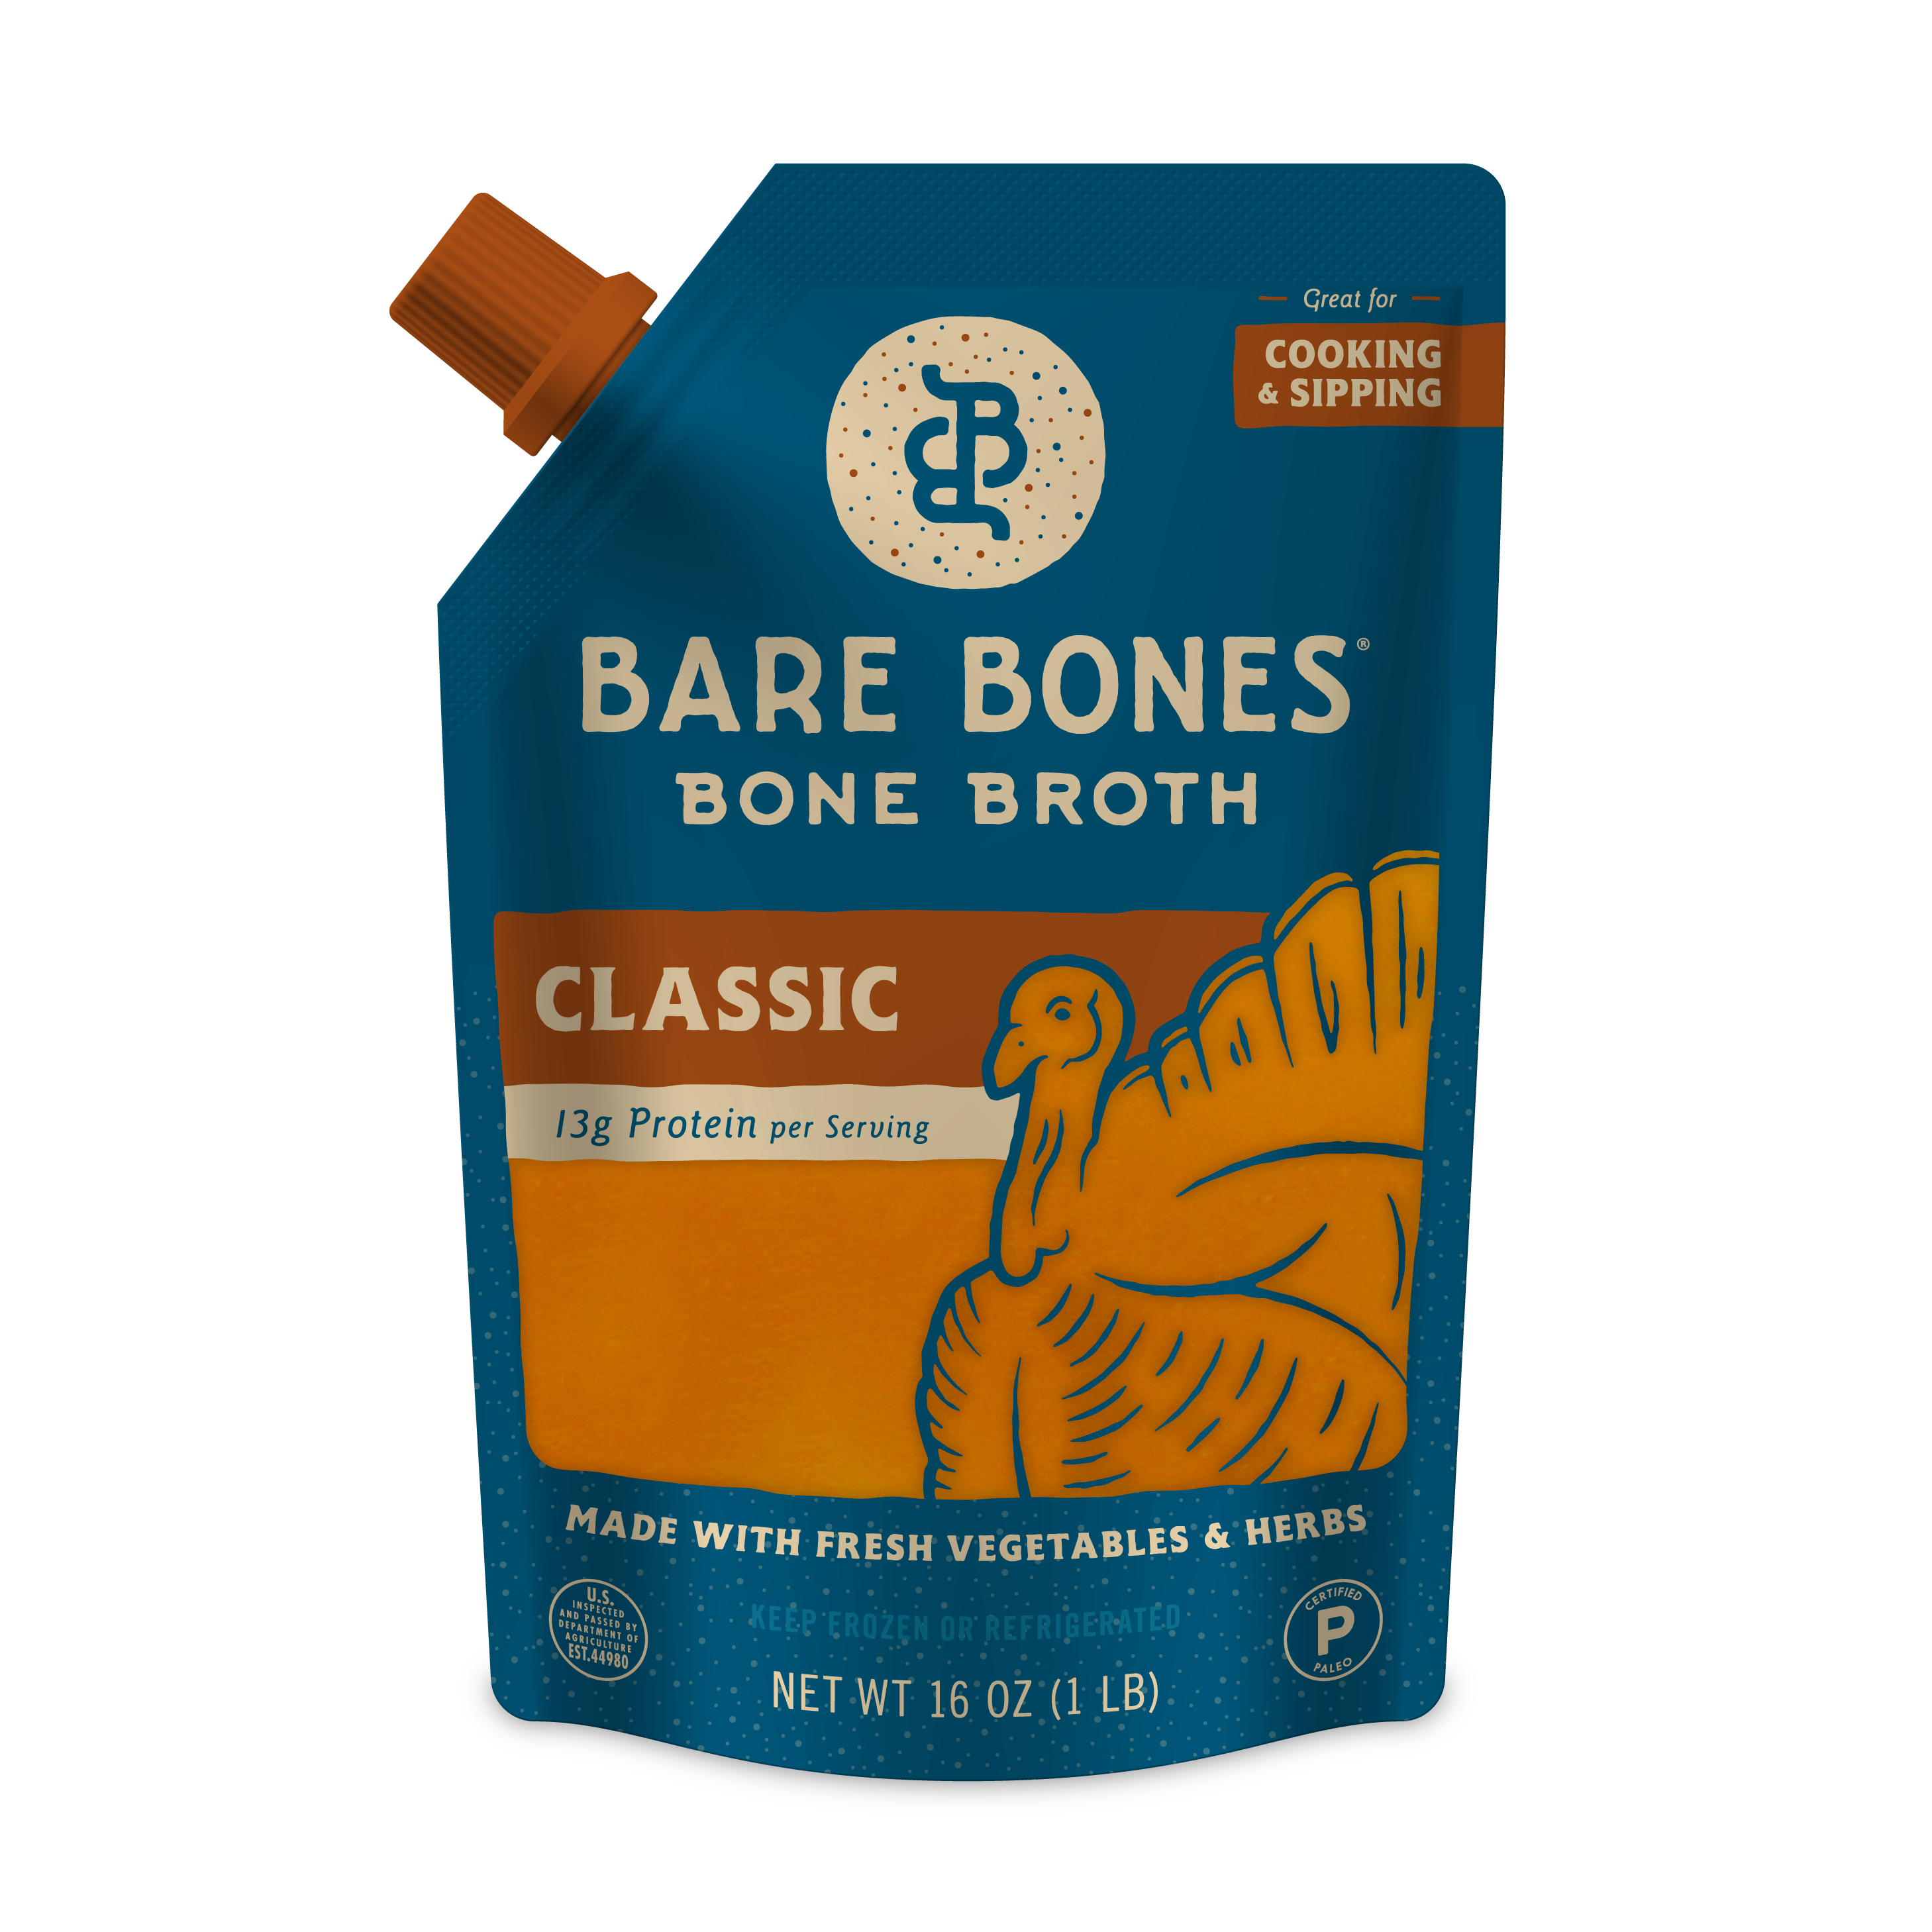 Bare bones fresh. Poultry Bone broth. Whole foods Bone broth. Beef Bone broth PNG. Bone Turkey.